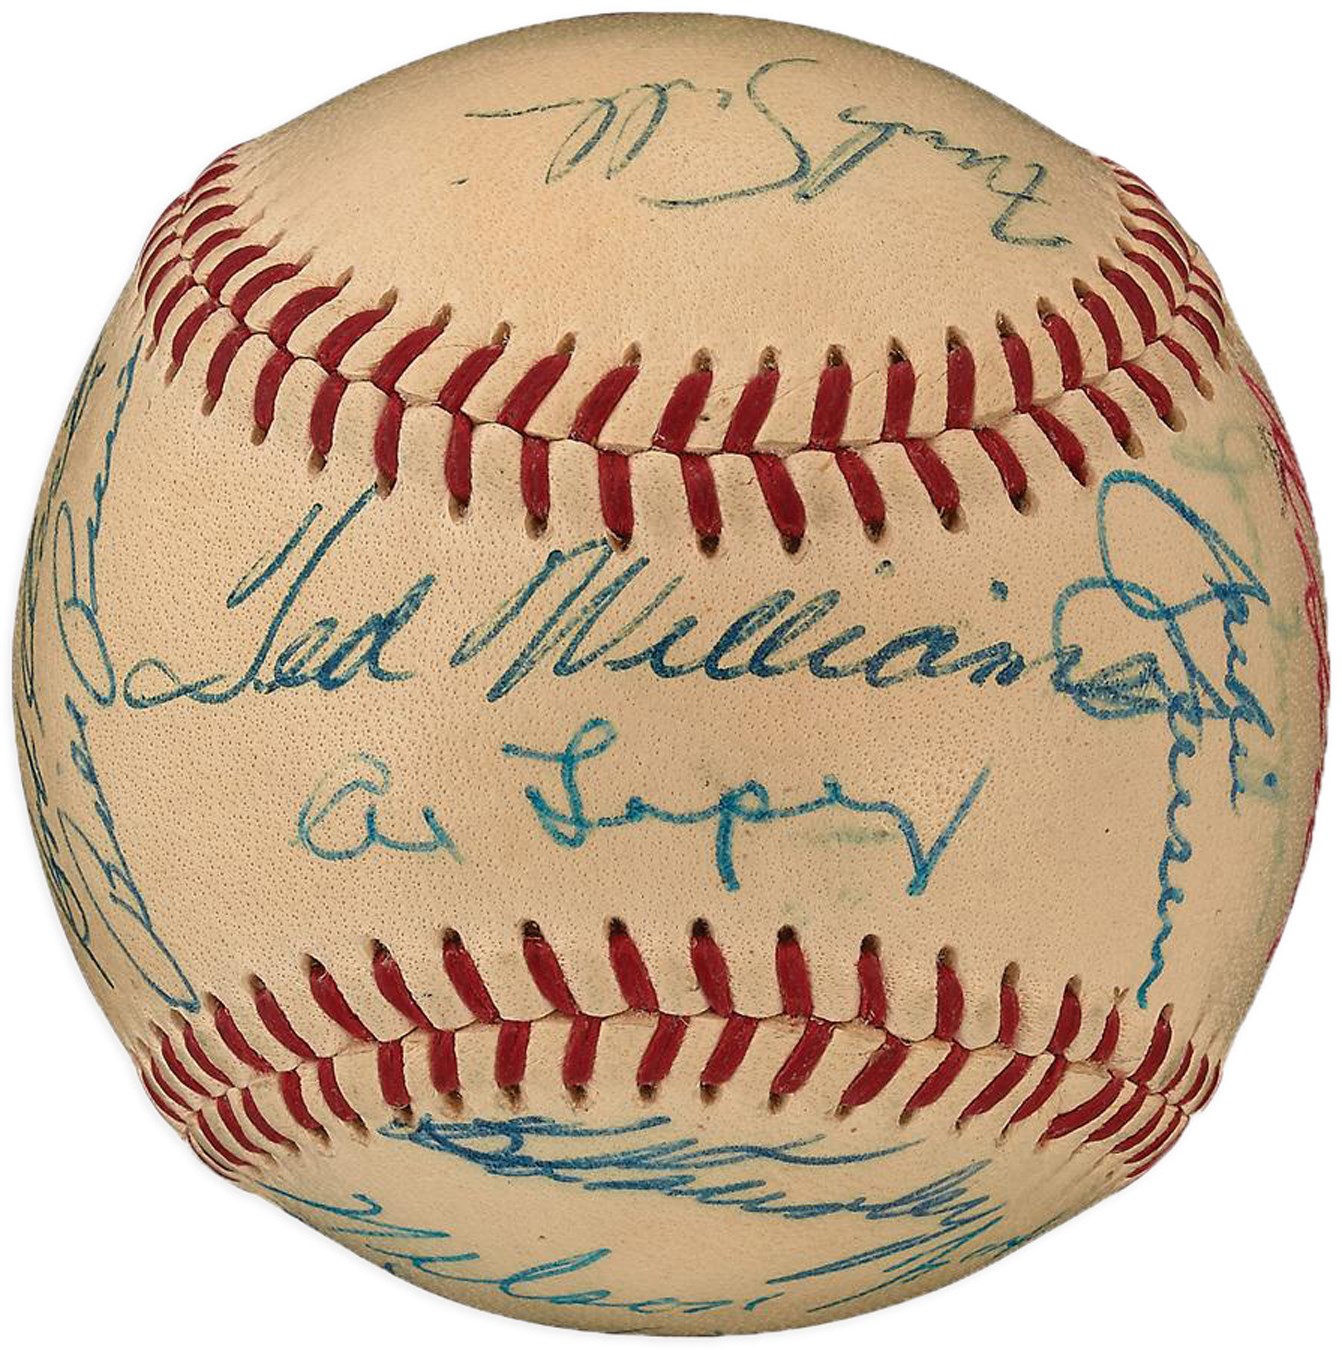 Baseball Autographs - 1955 American League All-Star Team-Signed Baseball - PSA Authenticated (Kluszewski Collection)